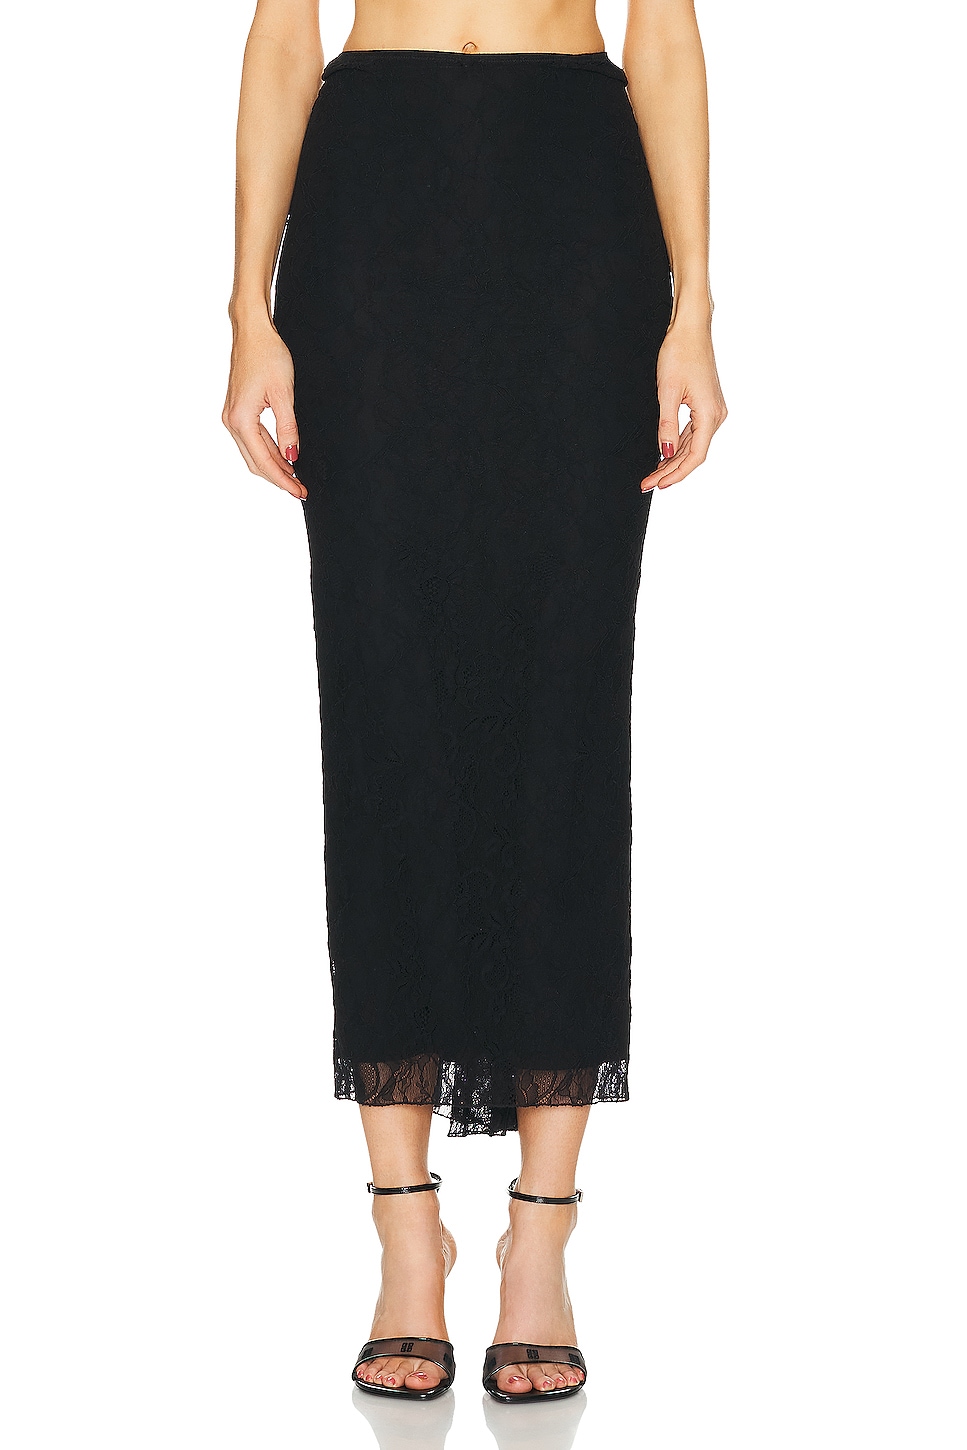 Dolce & Gabbana Laced Skirt in Nero | FWRD